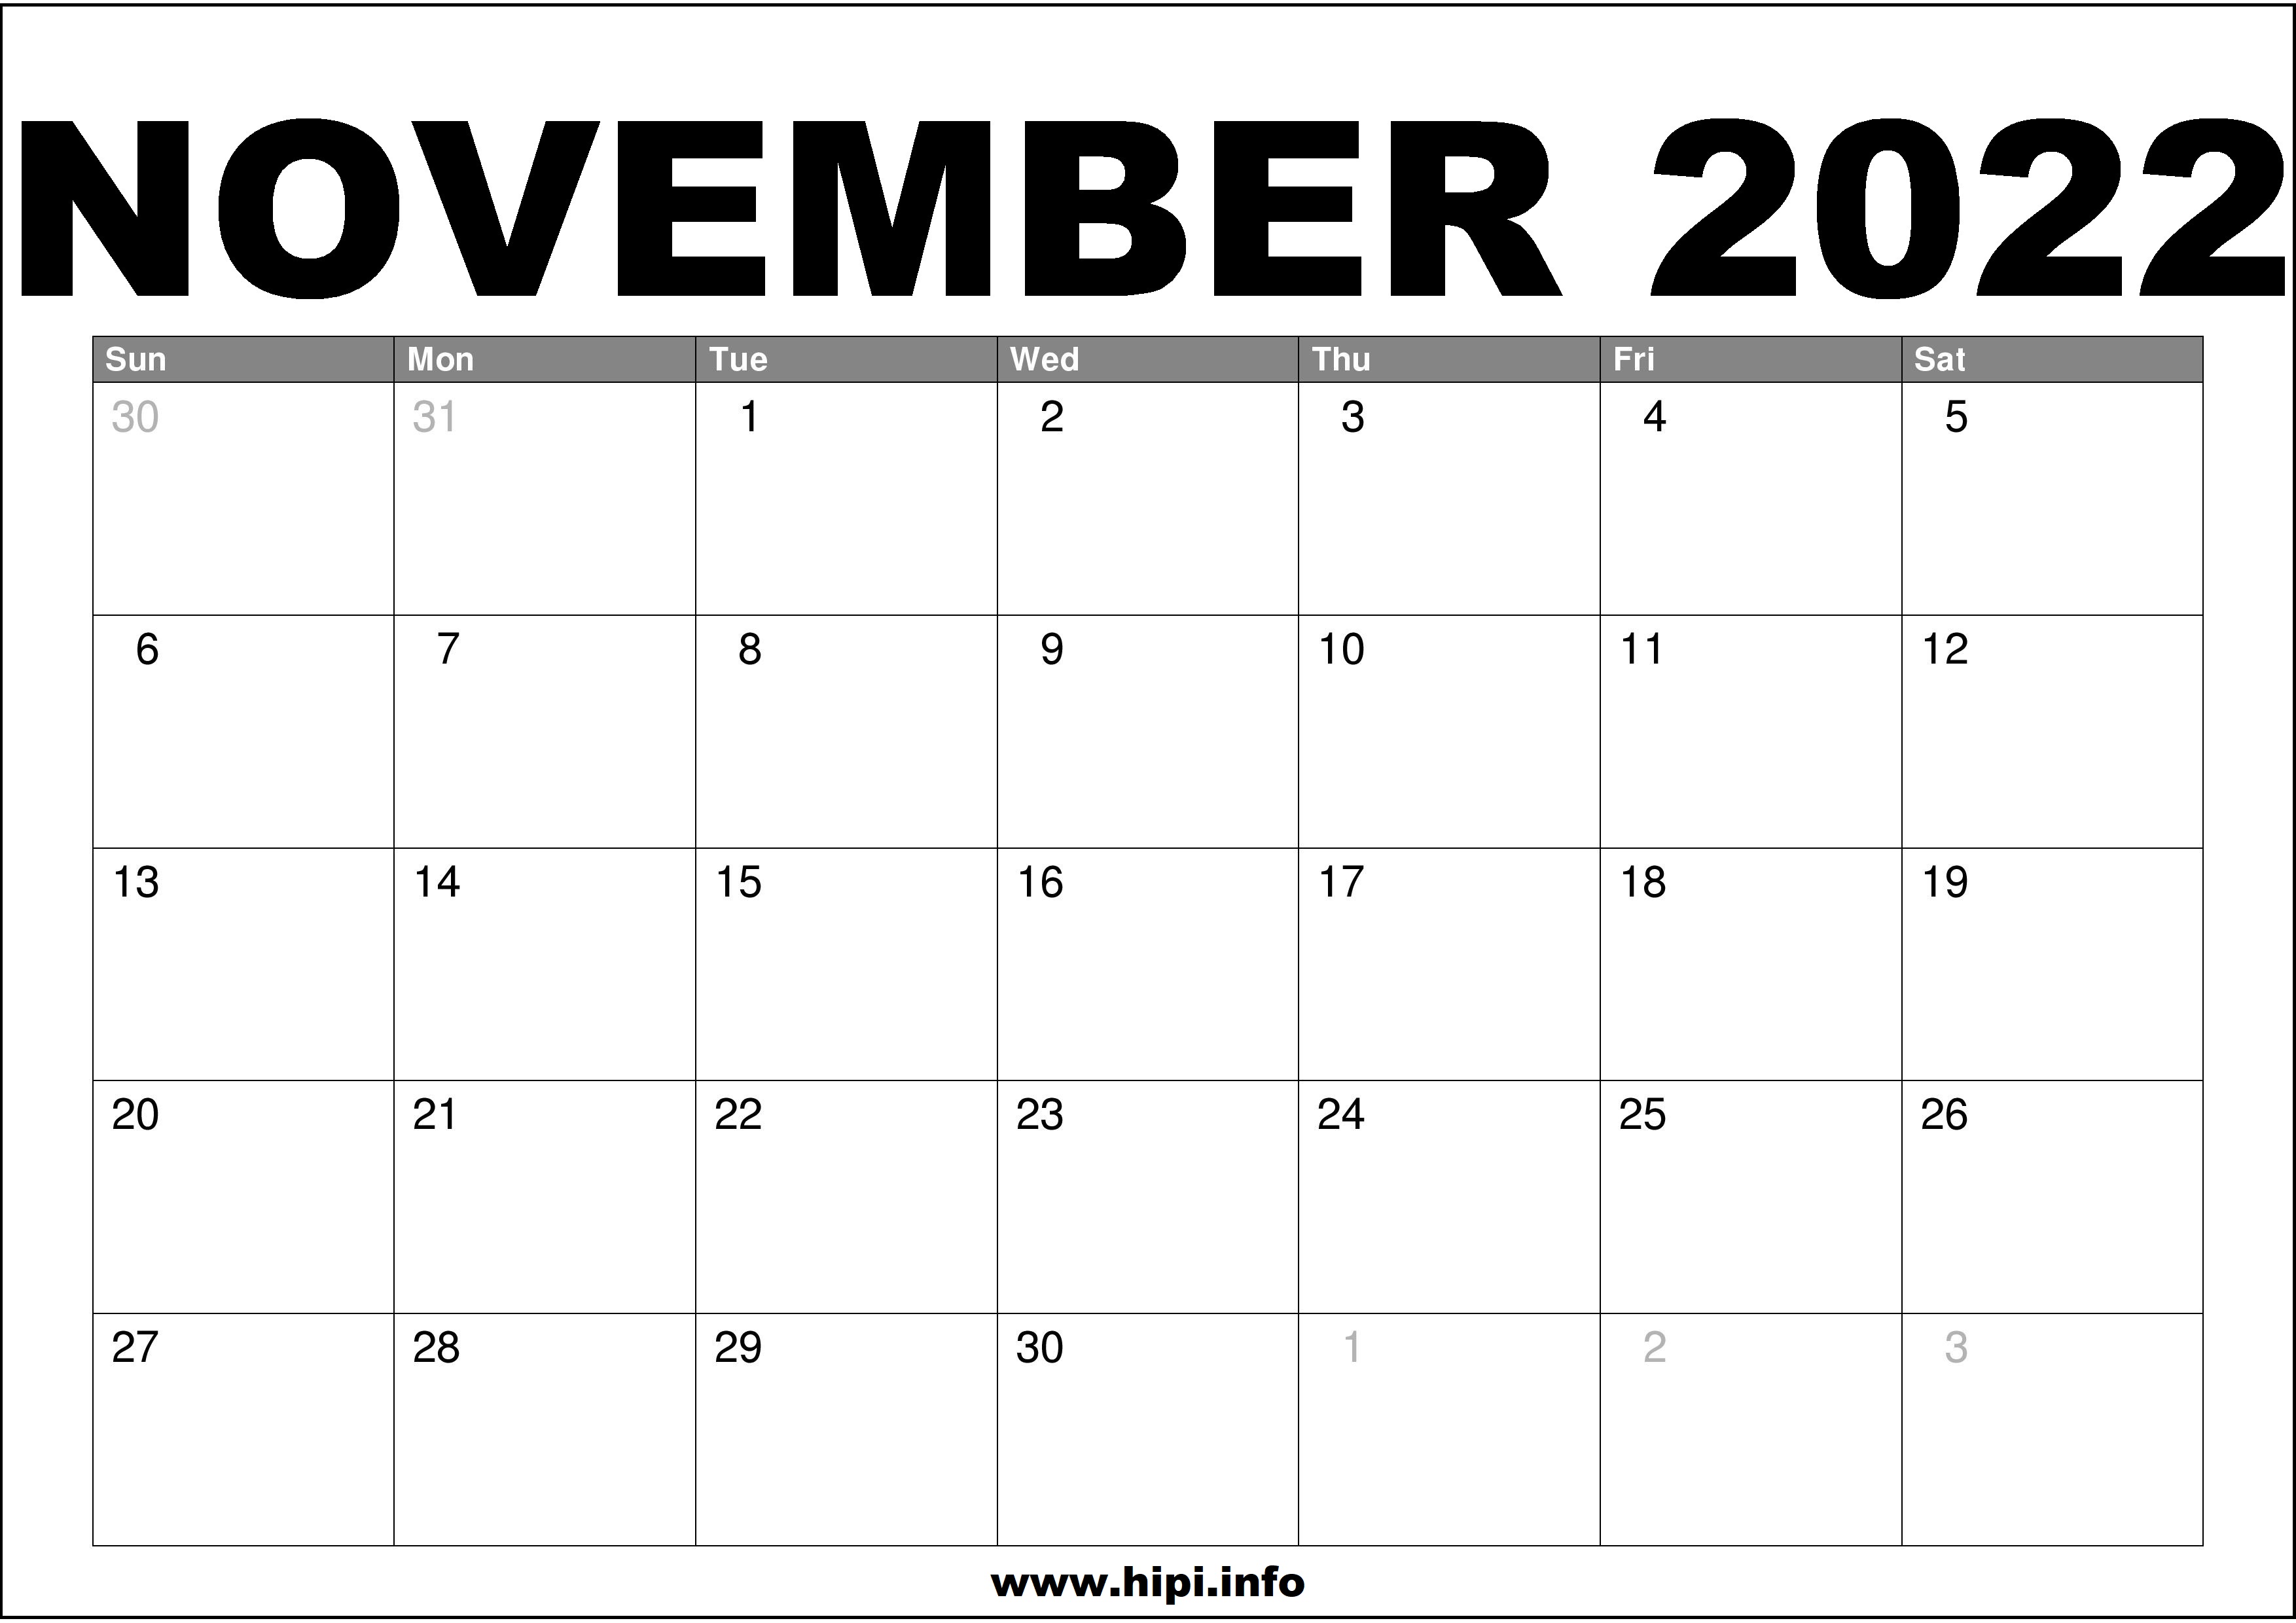 November 2022 Calendar Printable Free November 2022 Calendar Printable Free - Hipi.info | Calendars Printable Free